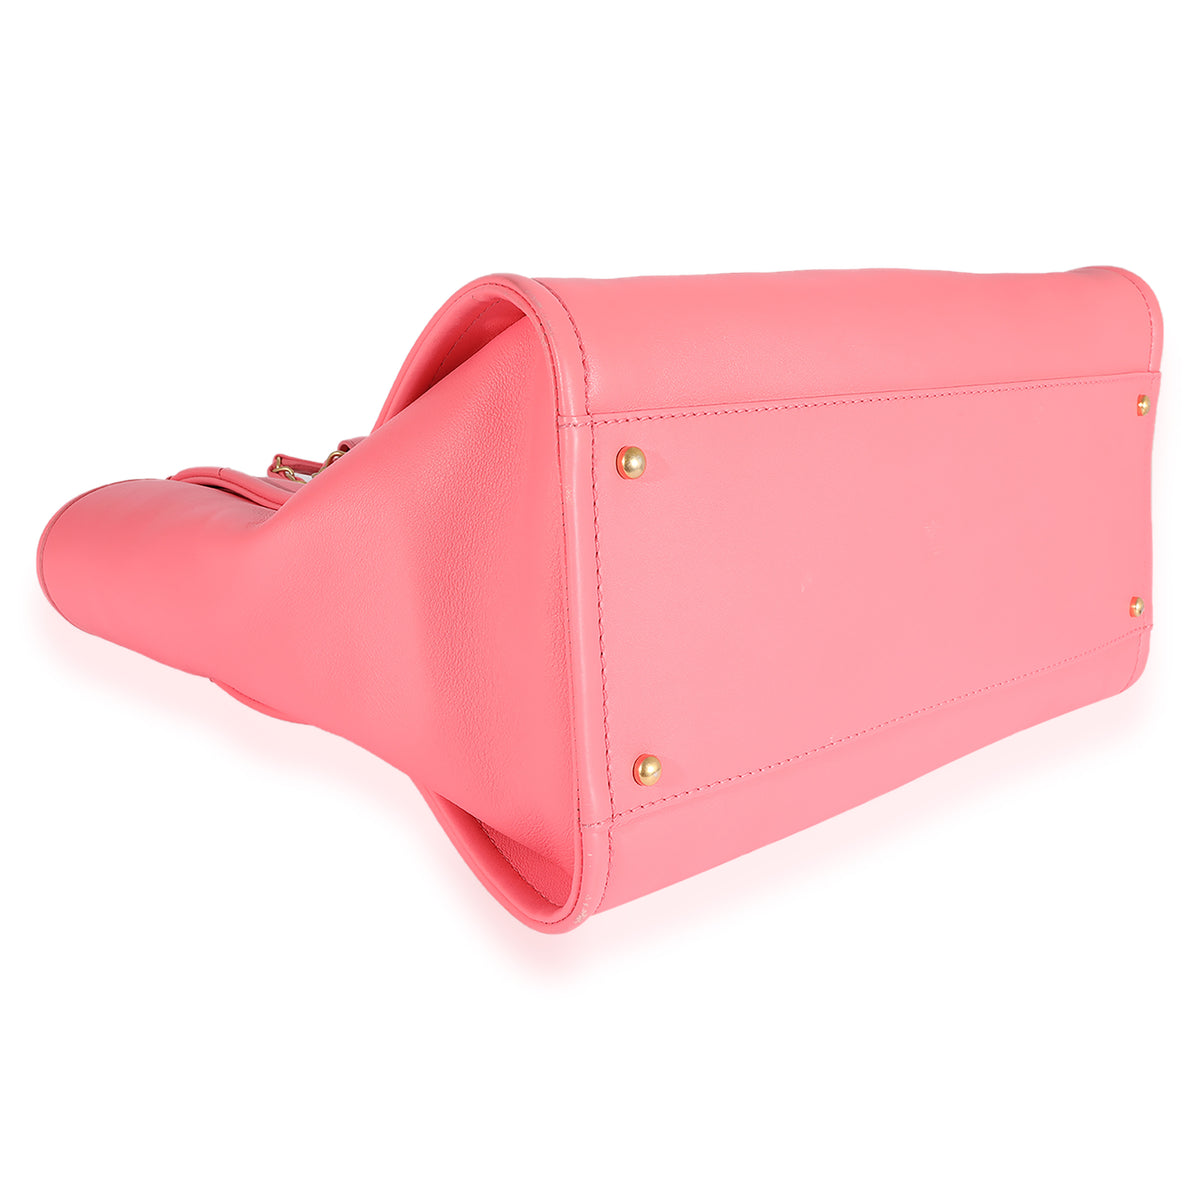 Chanel Medium Deauville Tote - Pink Totes, Handbags - CHA914967